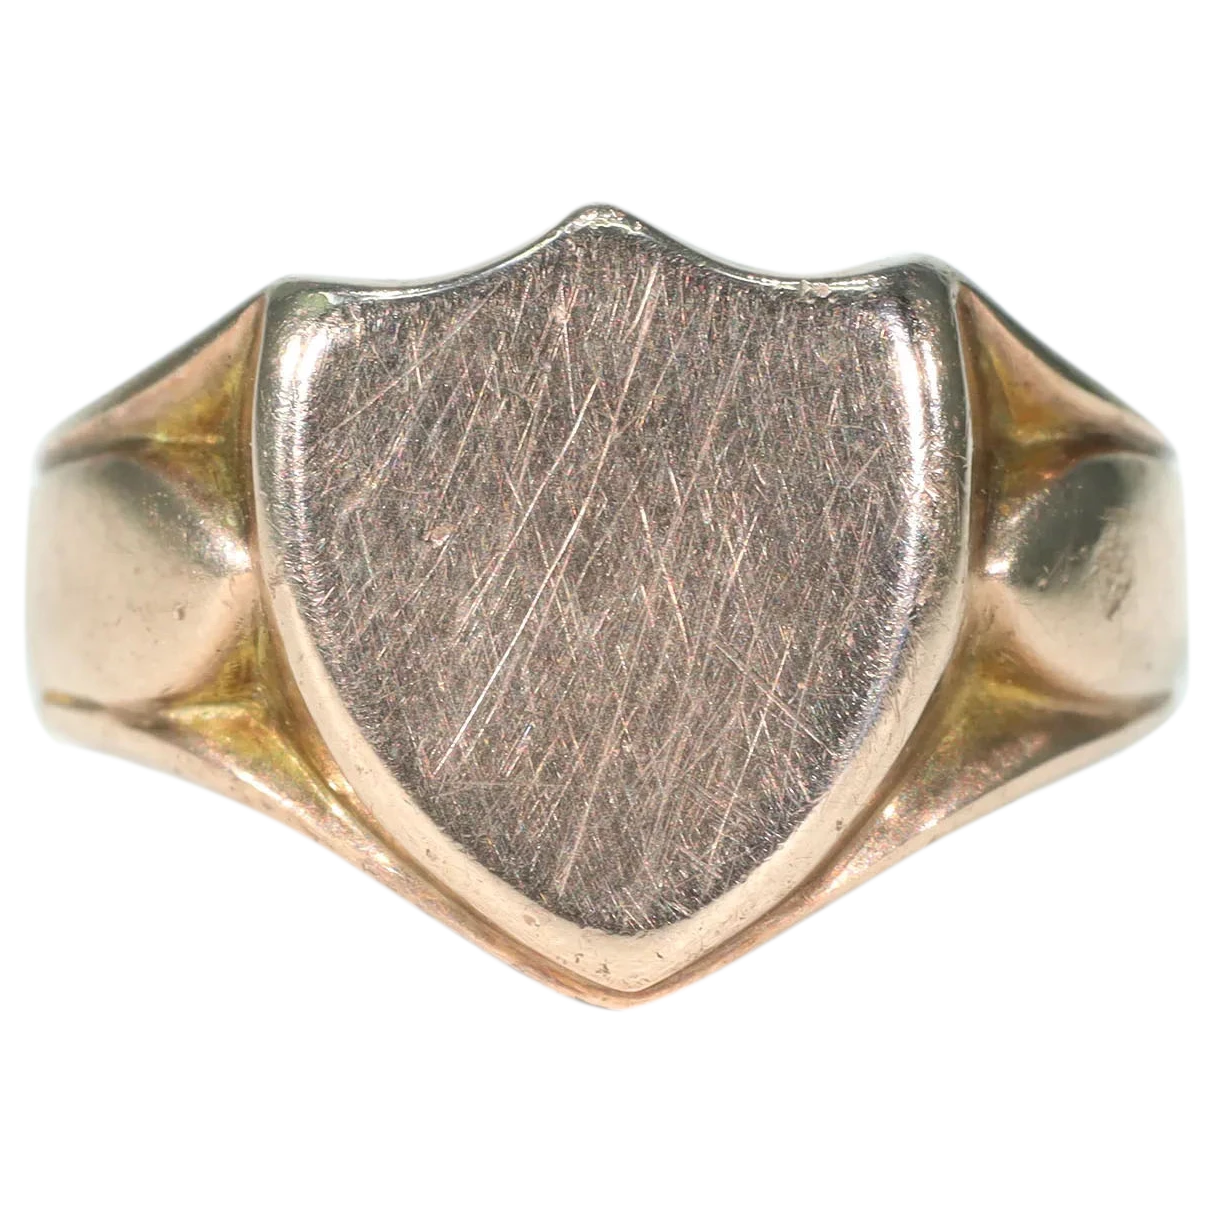 Victorian English Gold Signet Ring Shield